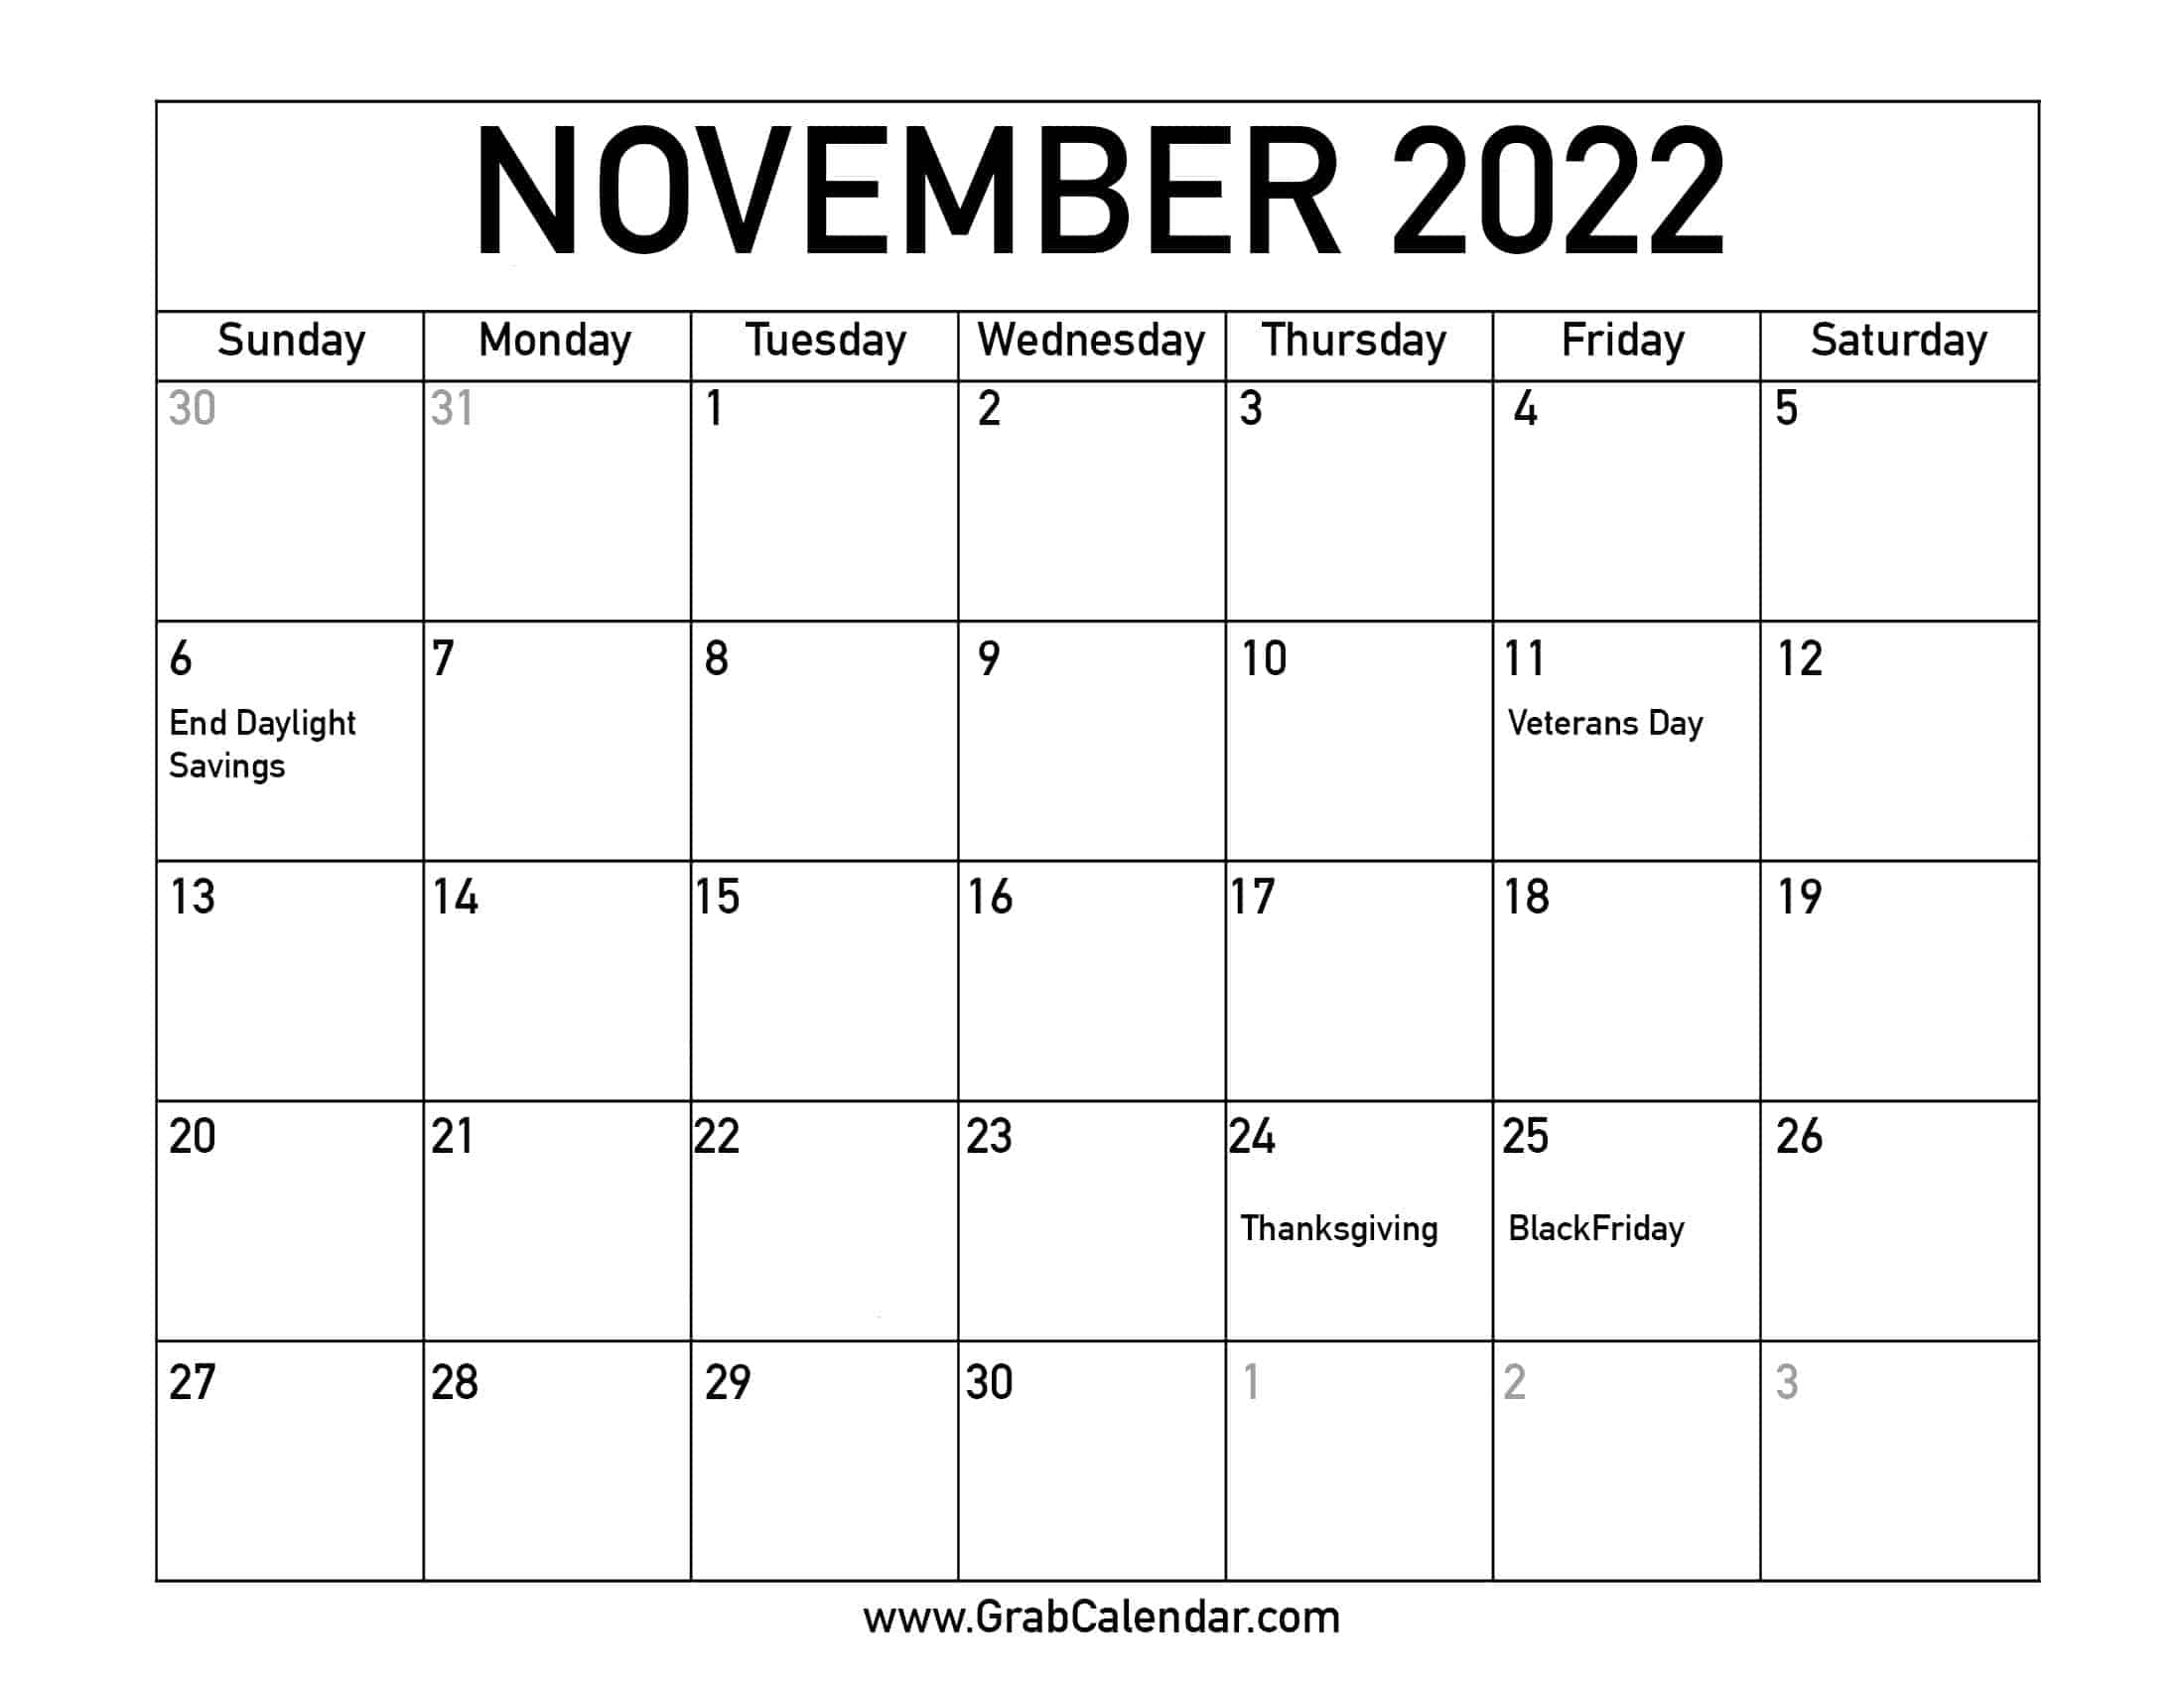 Novemberr 2022 Calendar Printable November 2022 Calendar